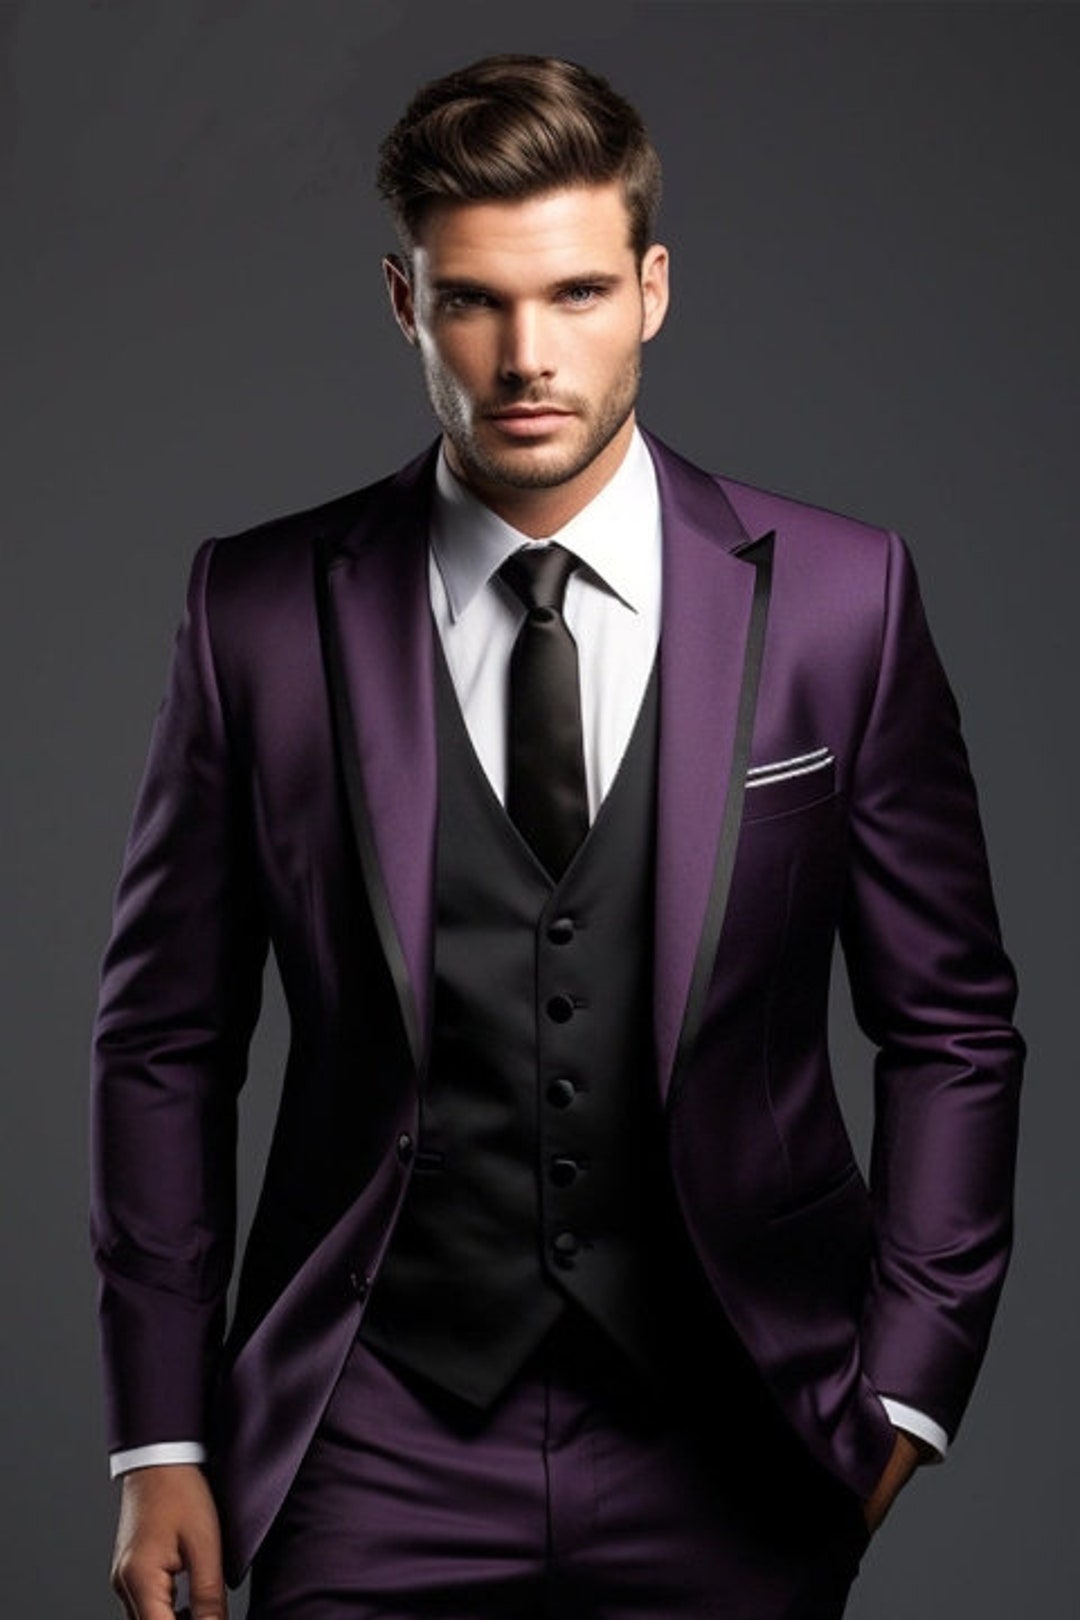 Men Suit Men's Elite Purple Tuxedo Suit Sophisticated Wedding Attire ...